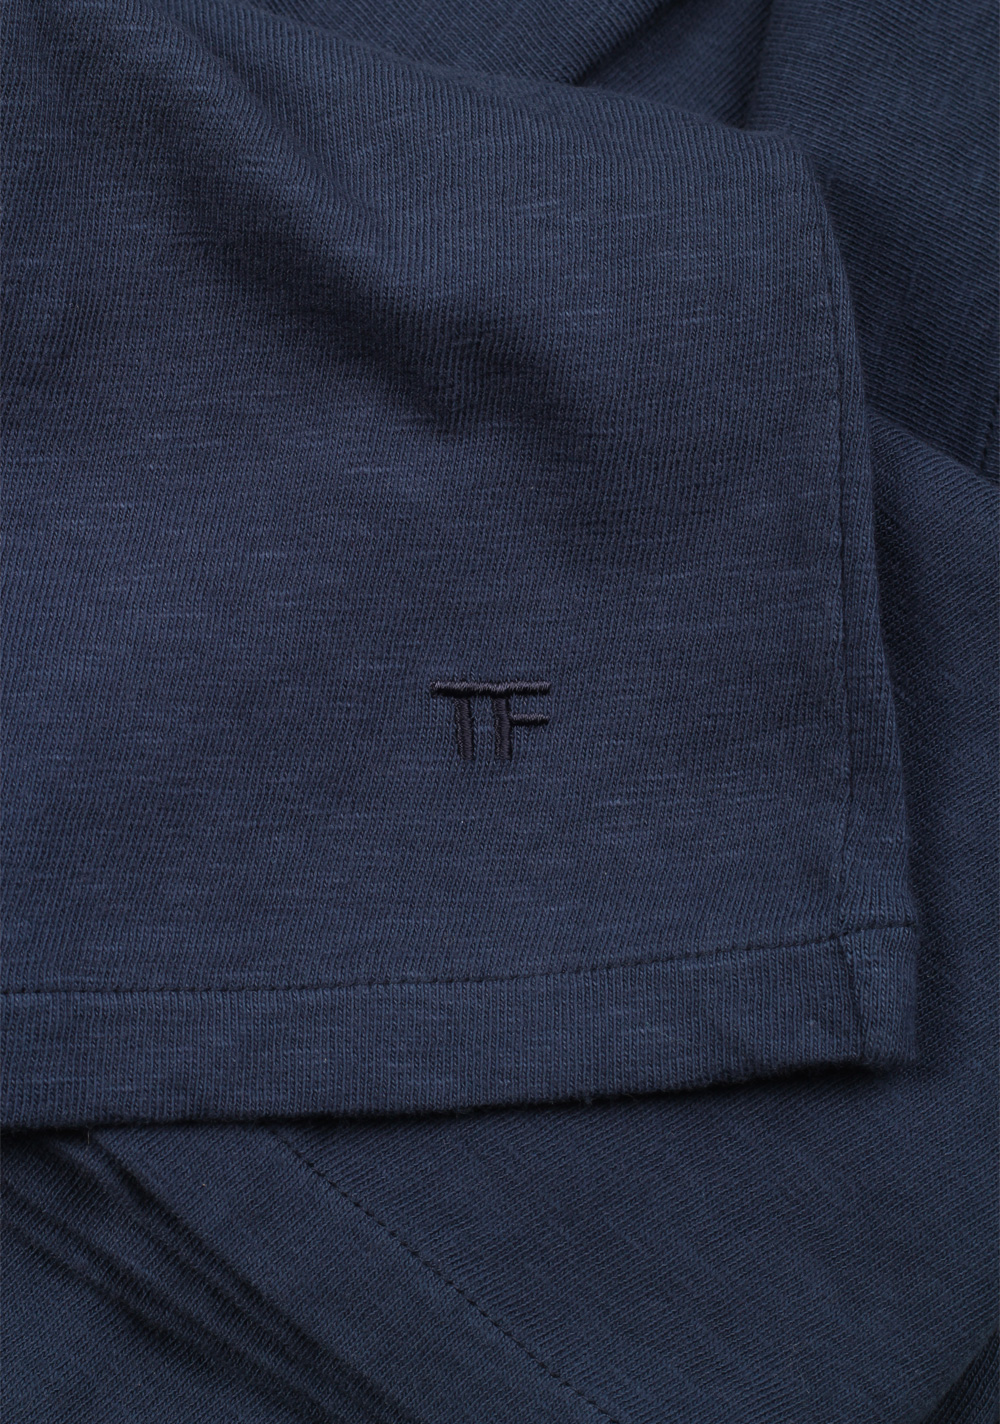 TOM FORD V Neck Tee Blue Shirt Size 46 / 36R U.S. | Costume Limité